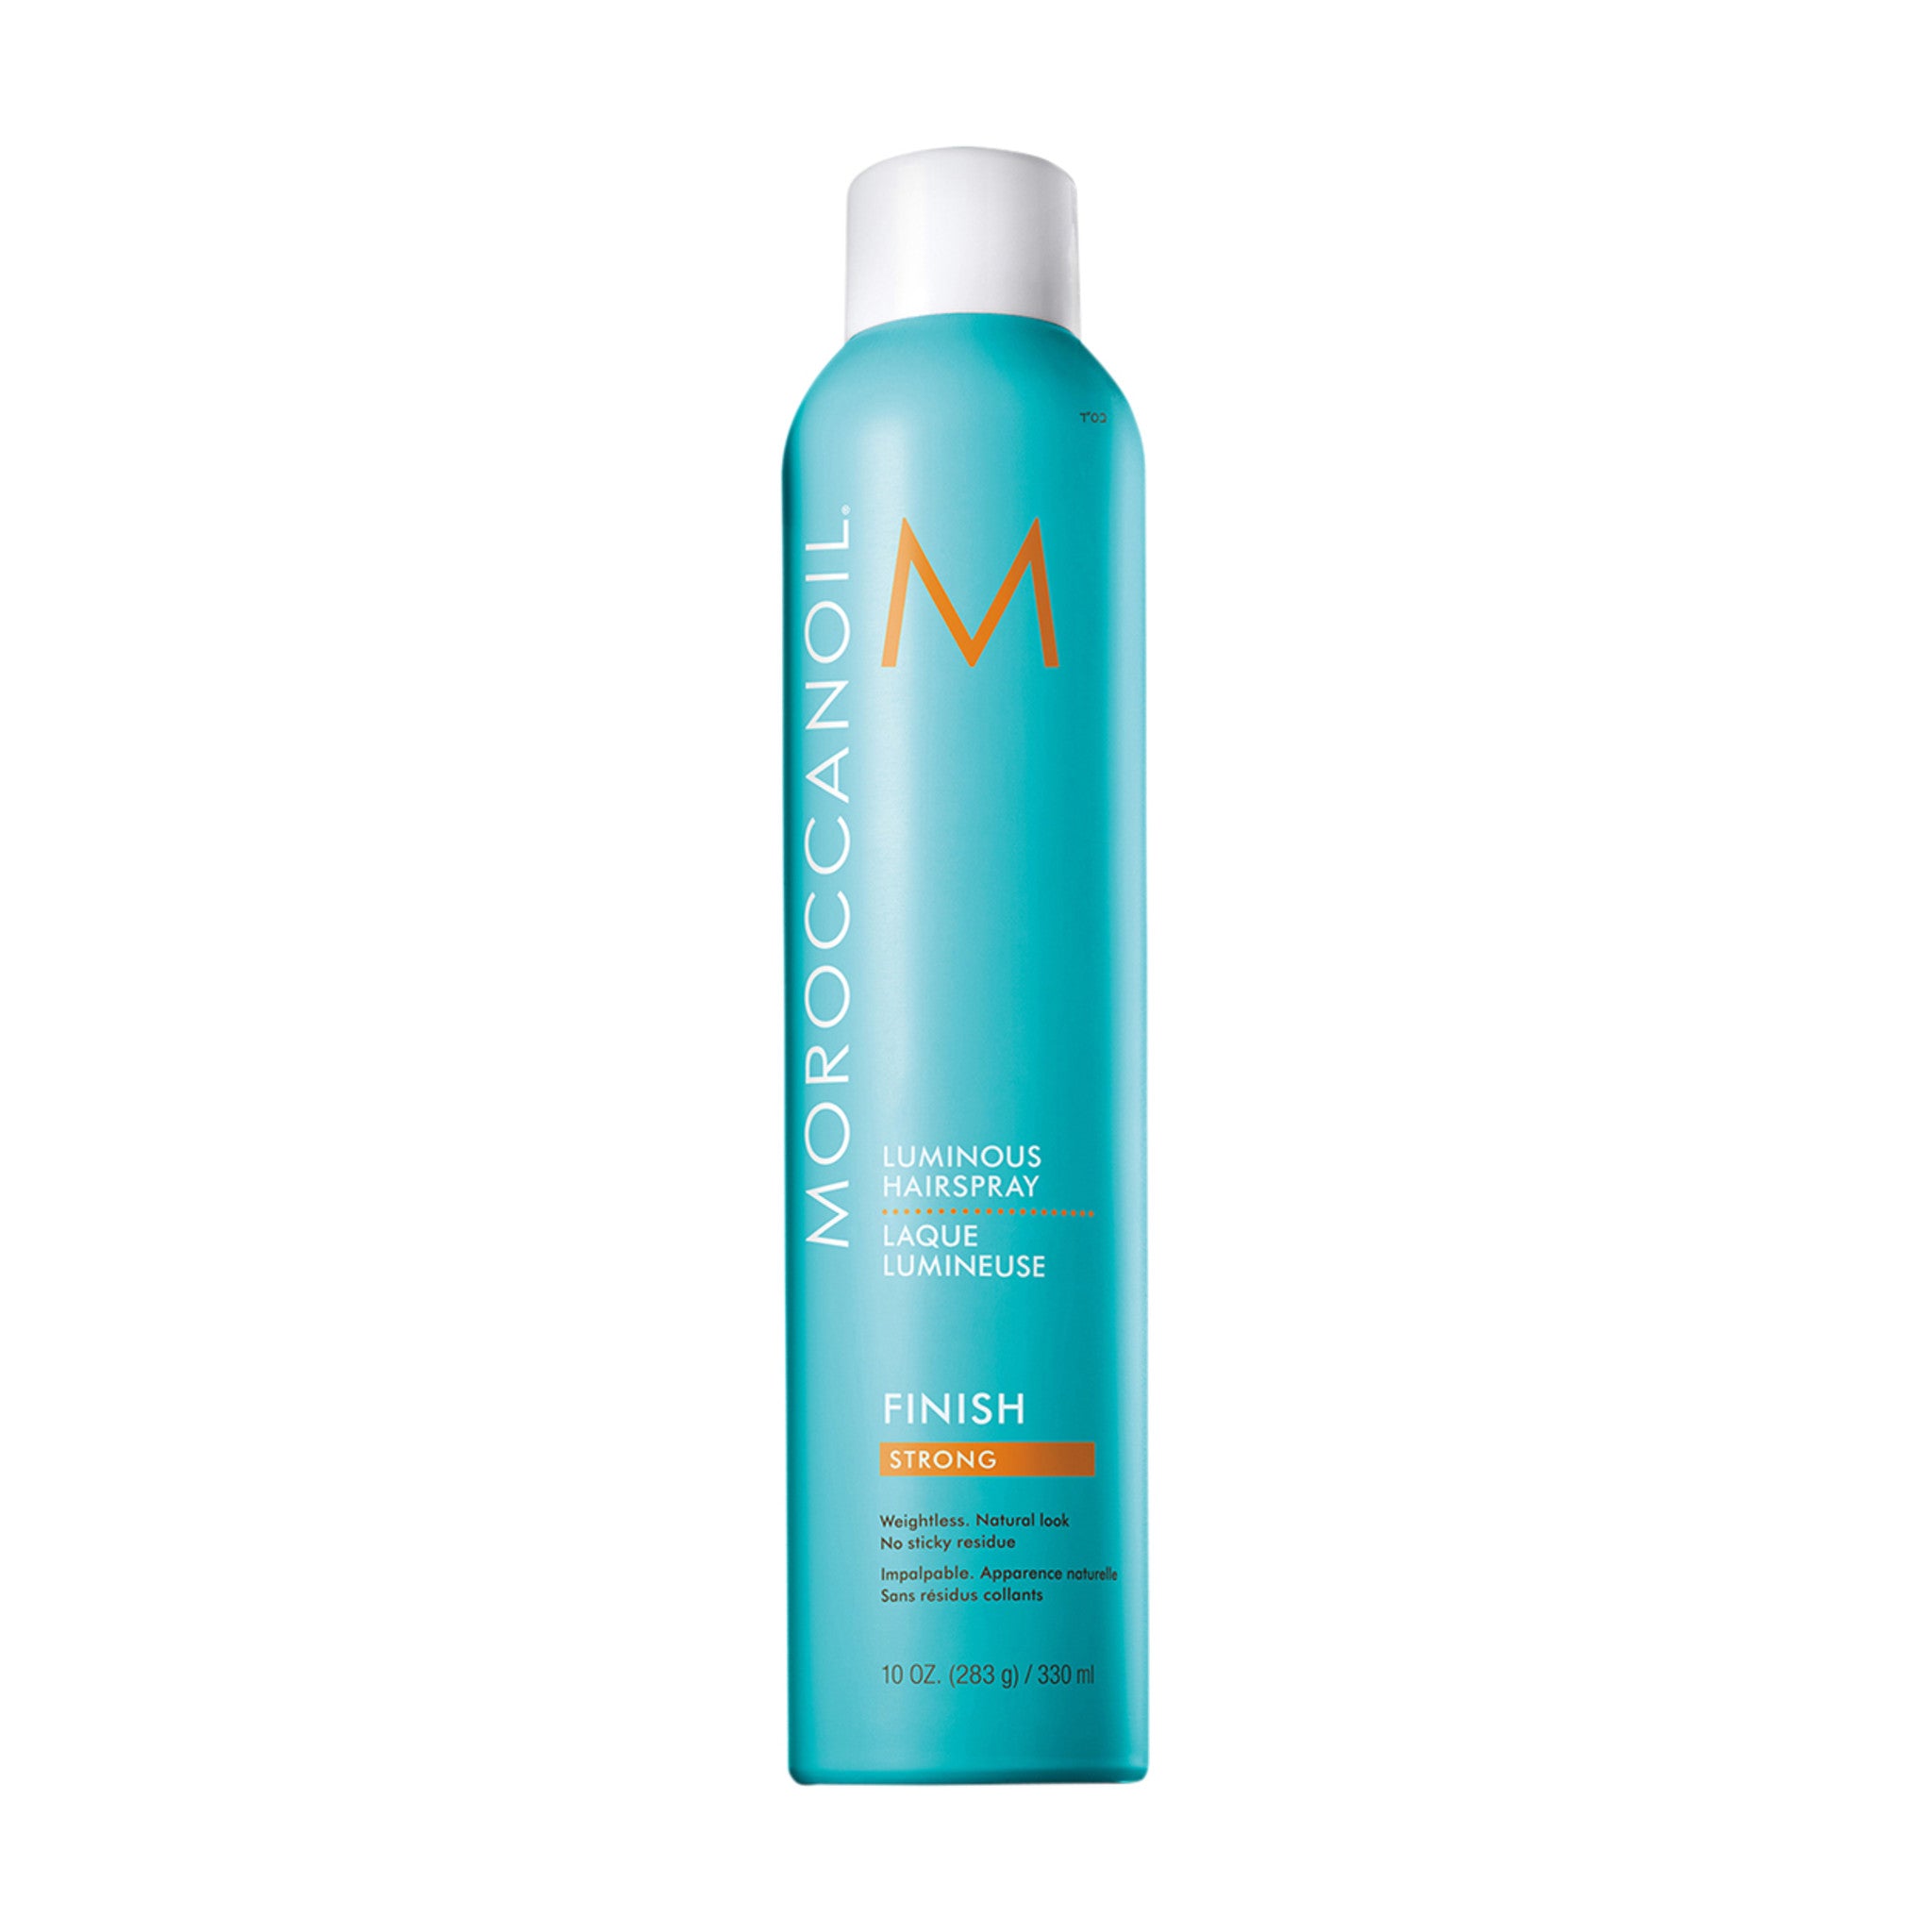 Moroccanoil Luminous Hairspray Strong Size variant: 10 oz | 330 ml main image.